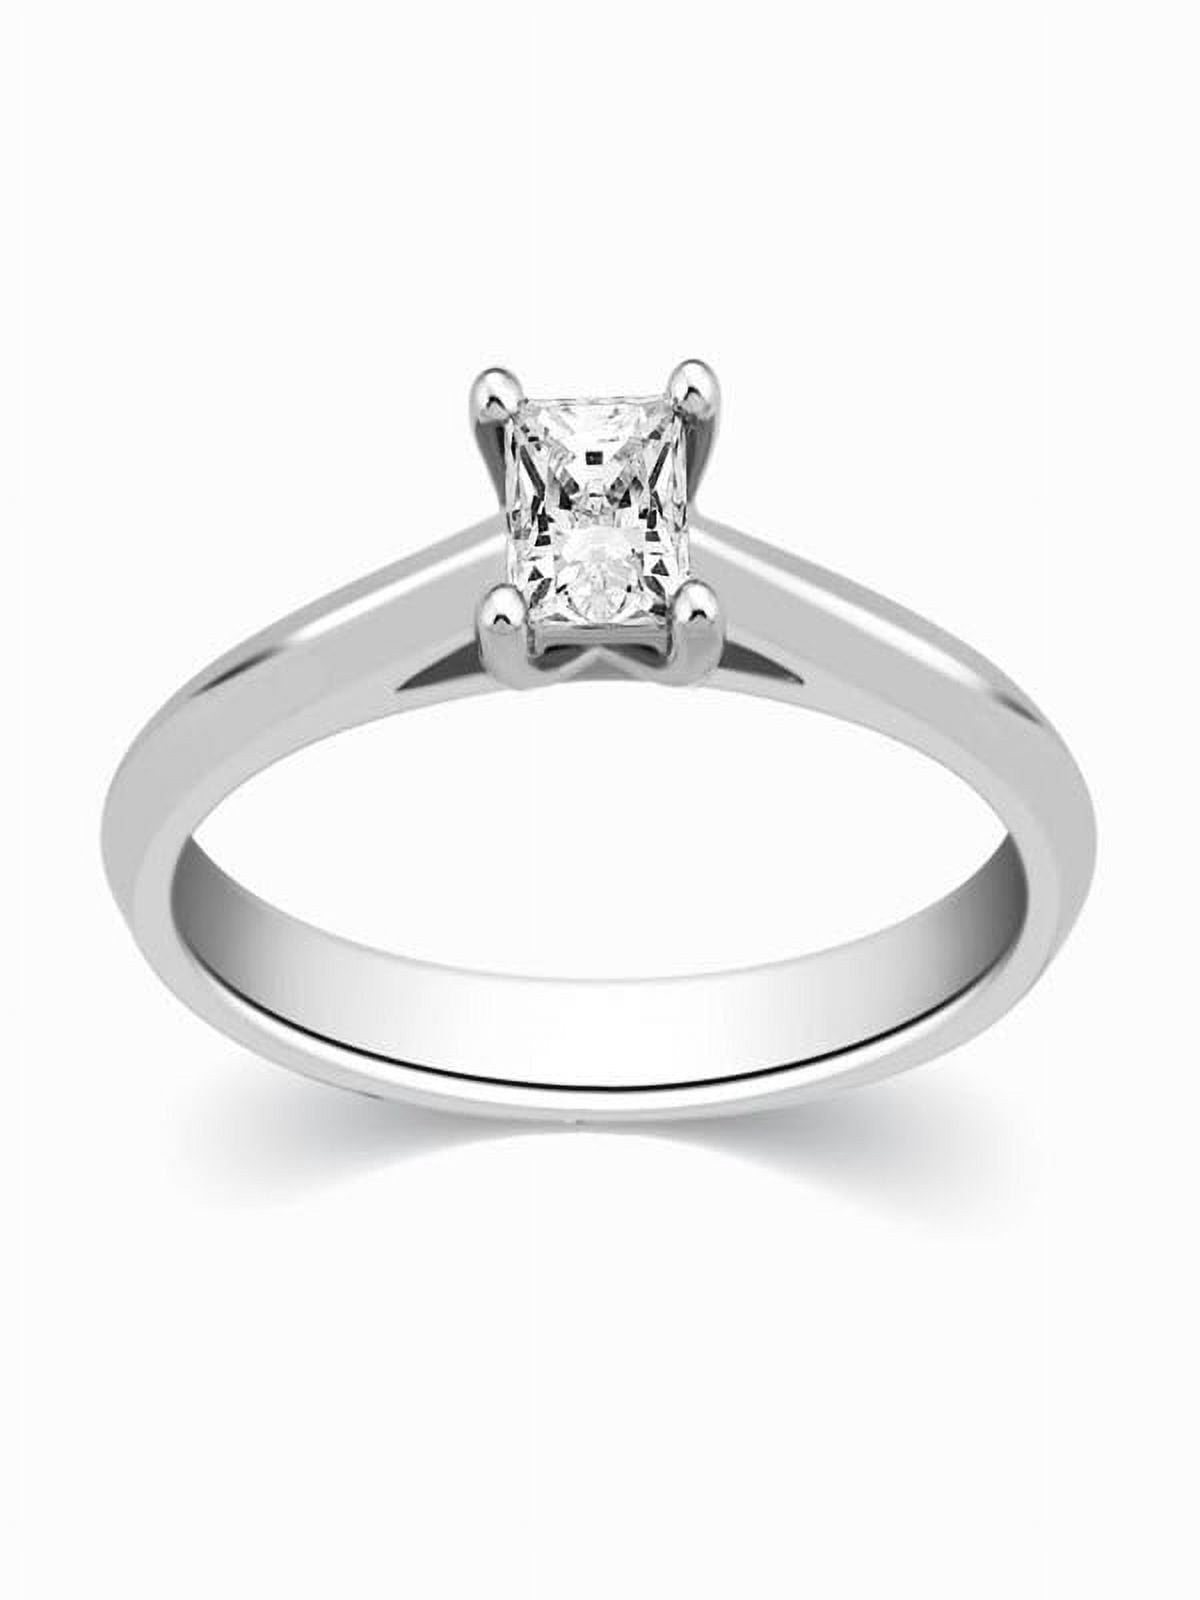 14K 0.25 Ct Old Mine Cut Diamond Engagement Ring Size 8 Yellow Gold - Ruby  Lane